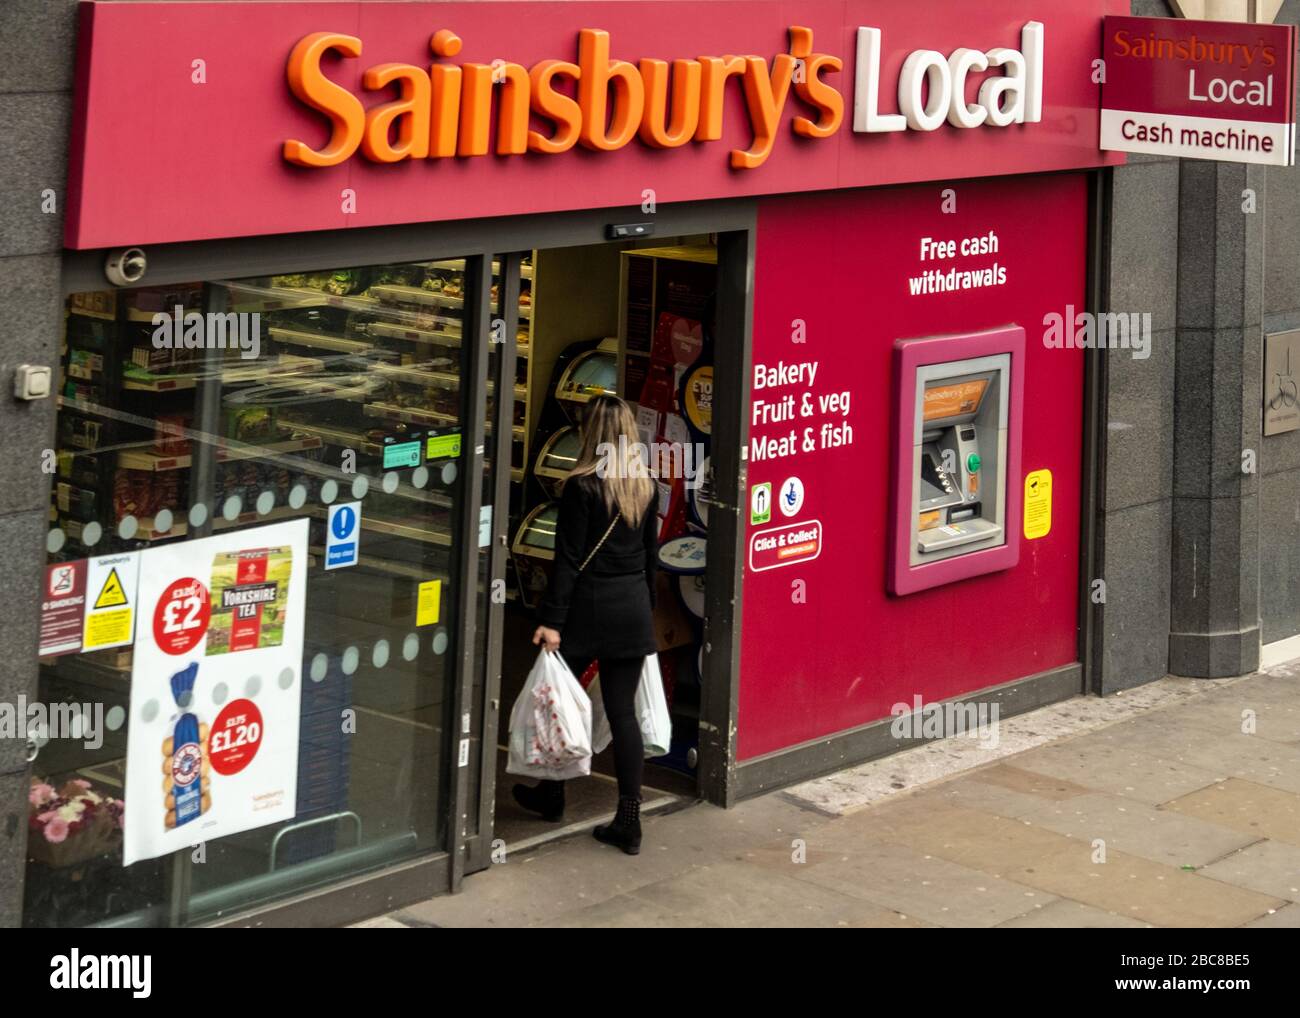 Sainsbury's Local, British supermarket branch, exterior logo / signage- London Stock Photo